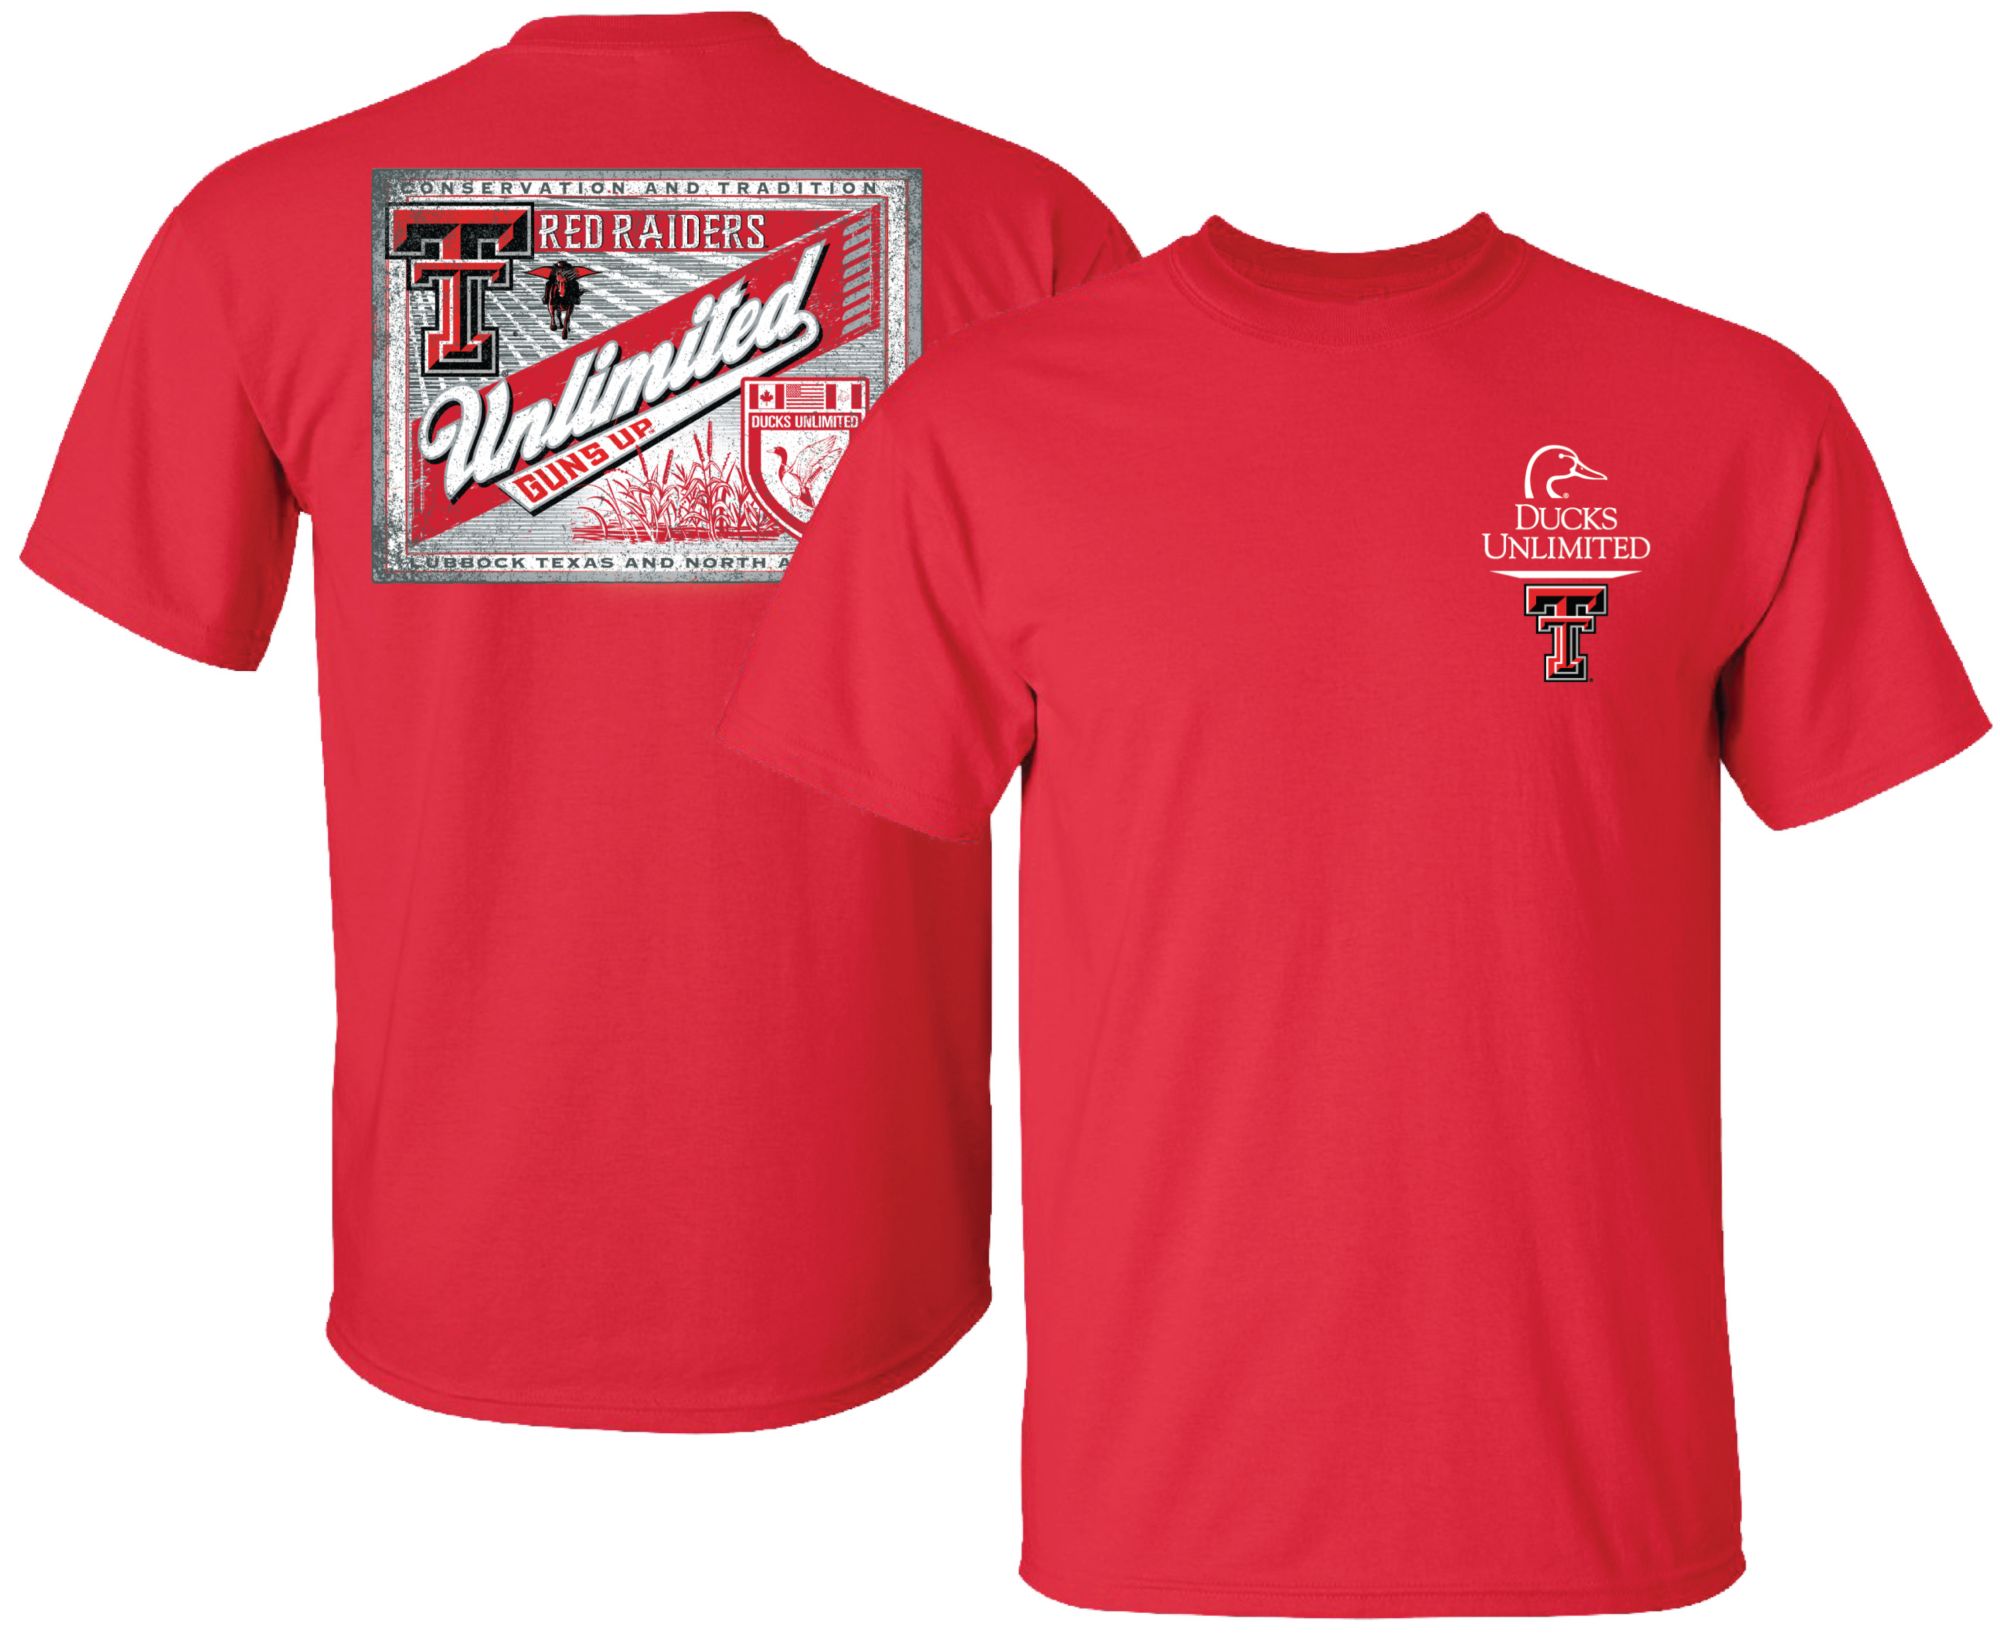 New World Graphics Men's Texas Tech Red Raiders Ducks Unlimited Label T-Shirt